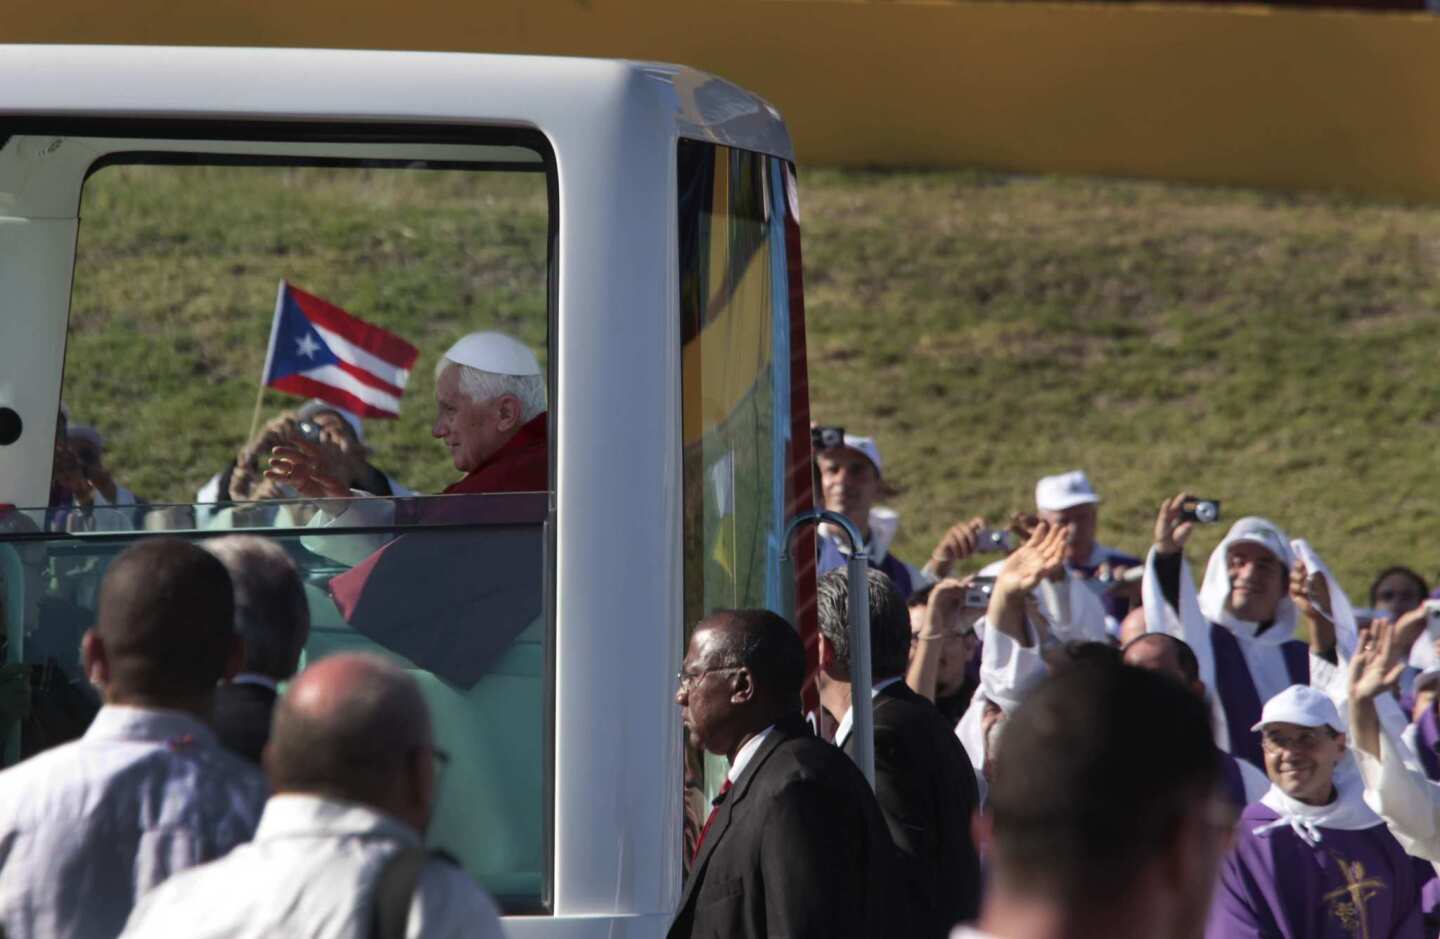 Pope Benedict XVI visit to Cuba draws thousands